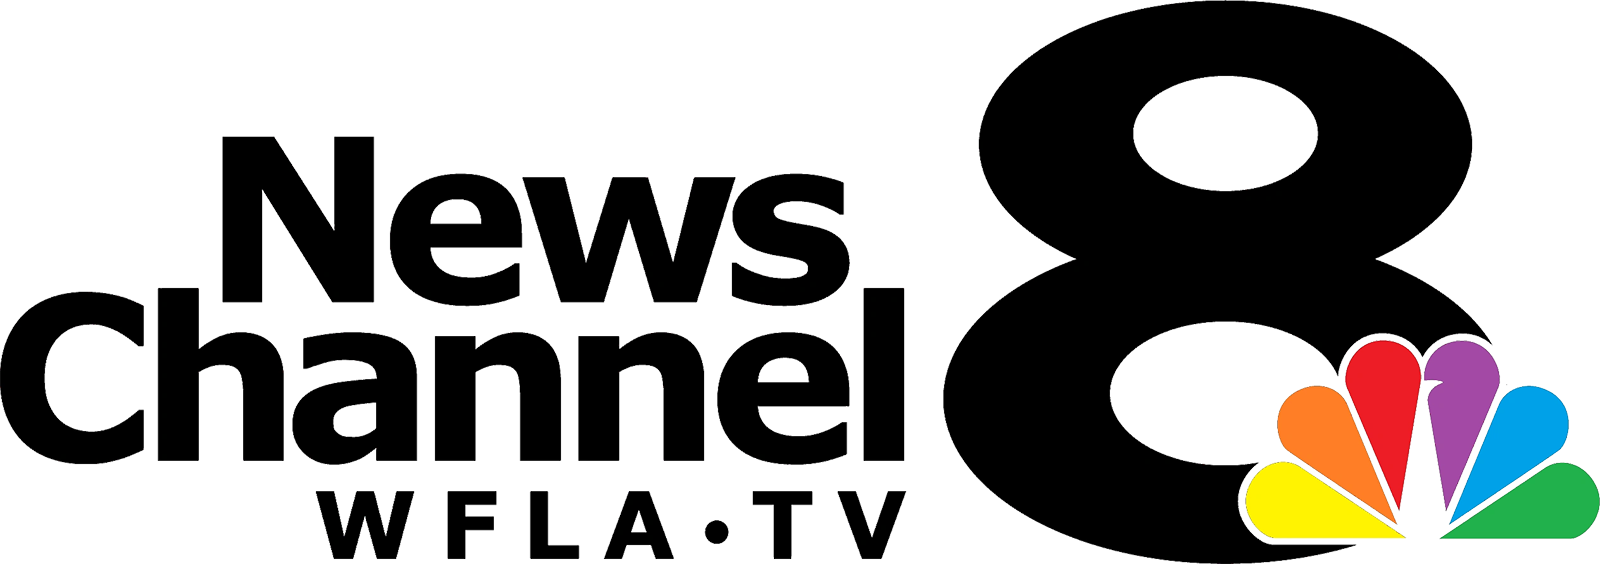 WFLA News Channel 8 logo